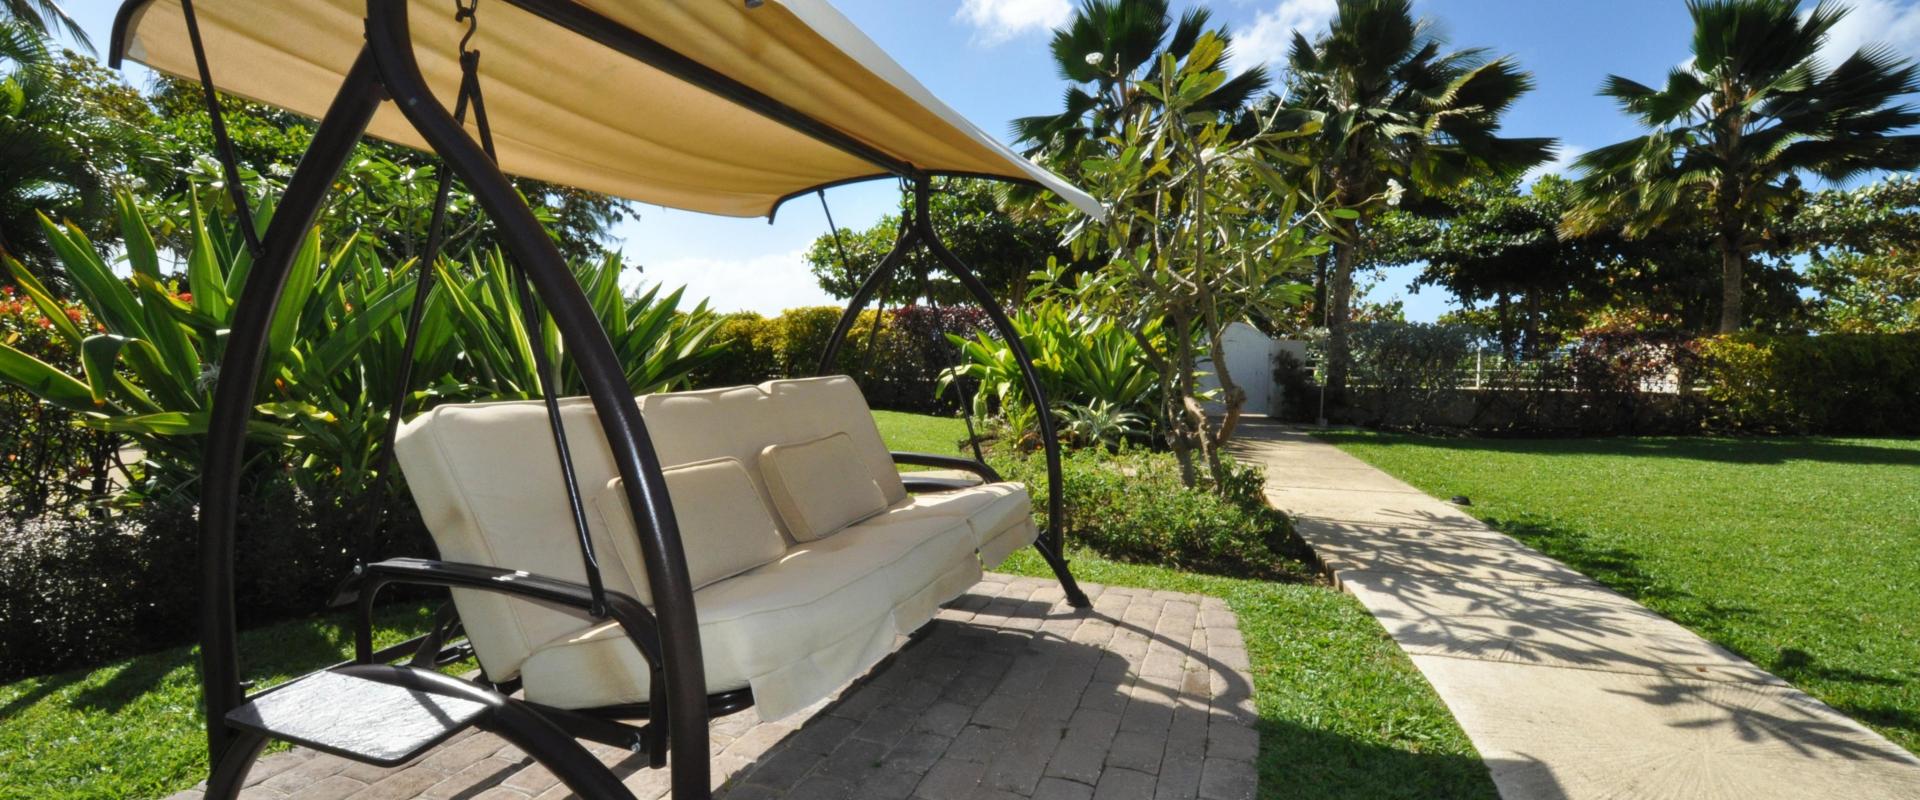 Palm Beach 211 Barbados Beachfront Vacation Condo Rental Seating in Gardens